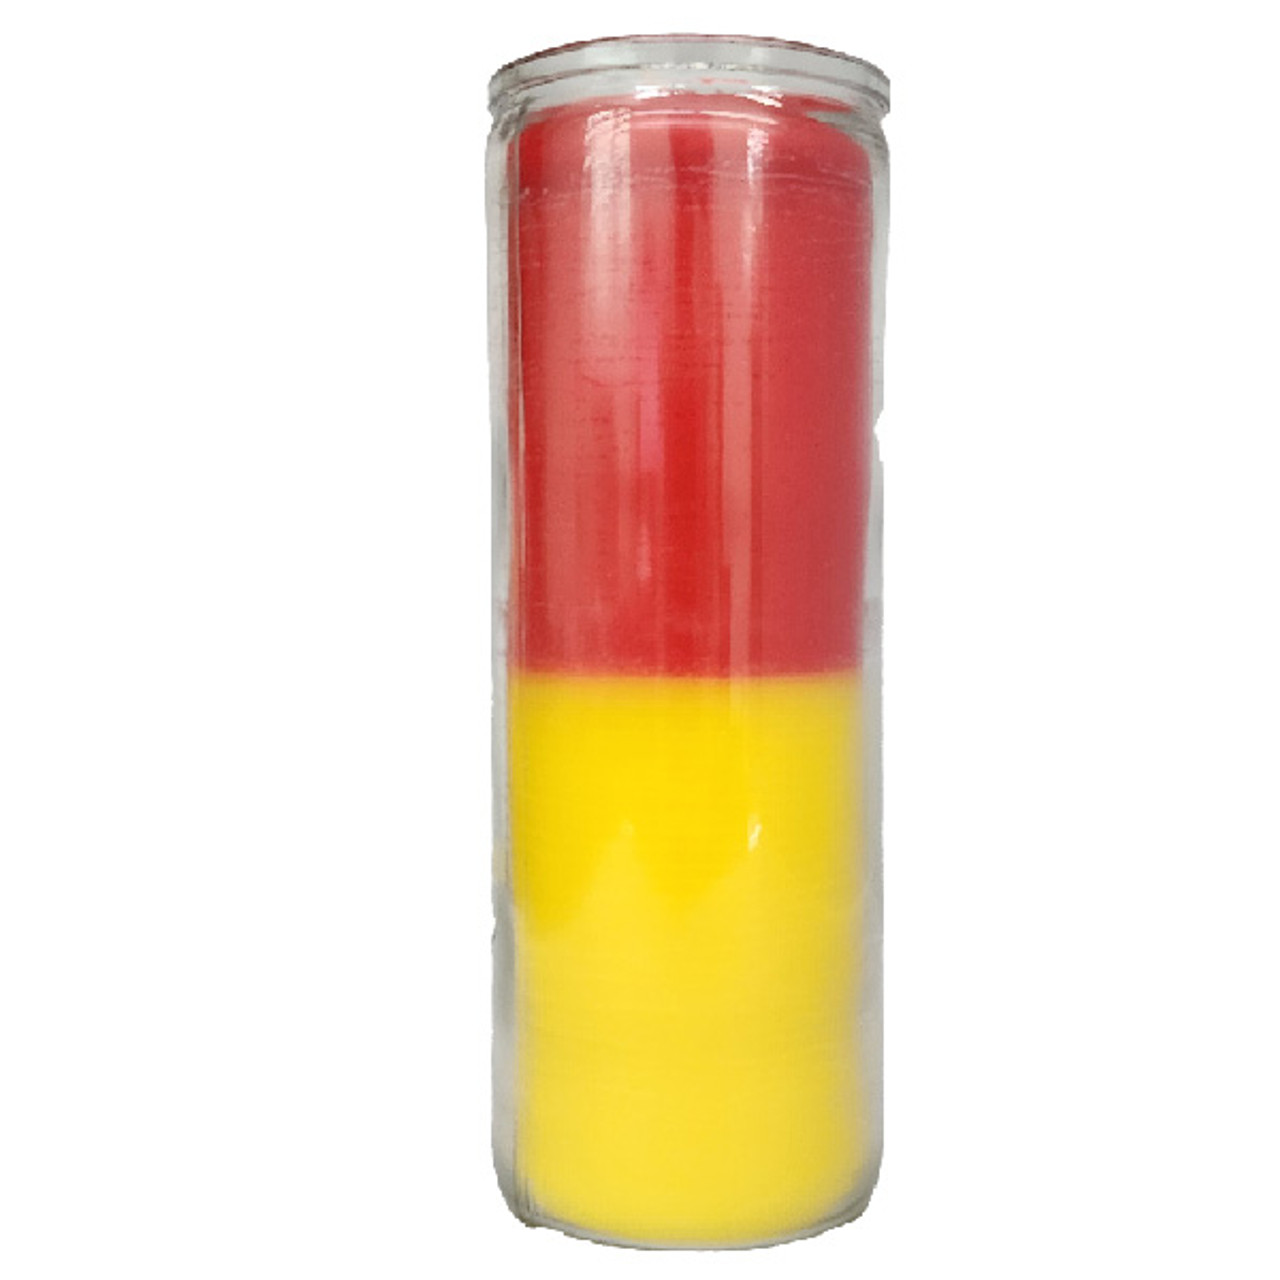 7 Day Plain Candle - Veladora 7 Dias - Amarilla - Roja